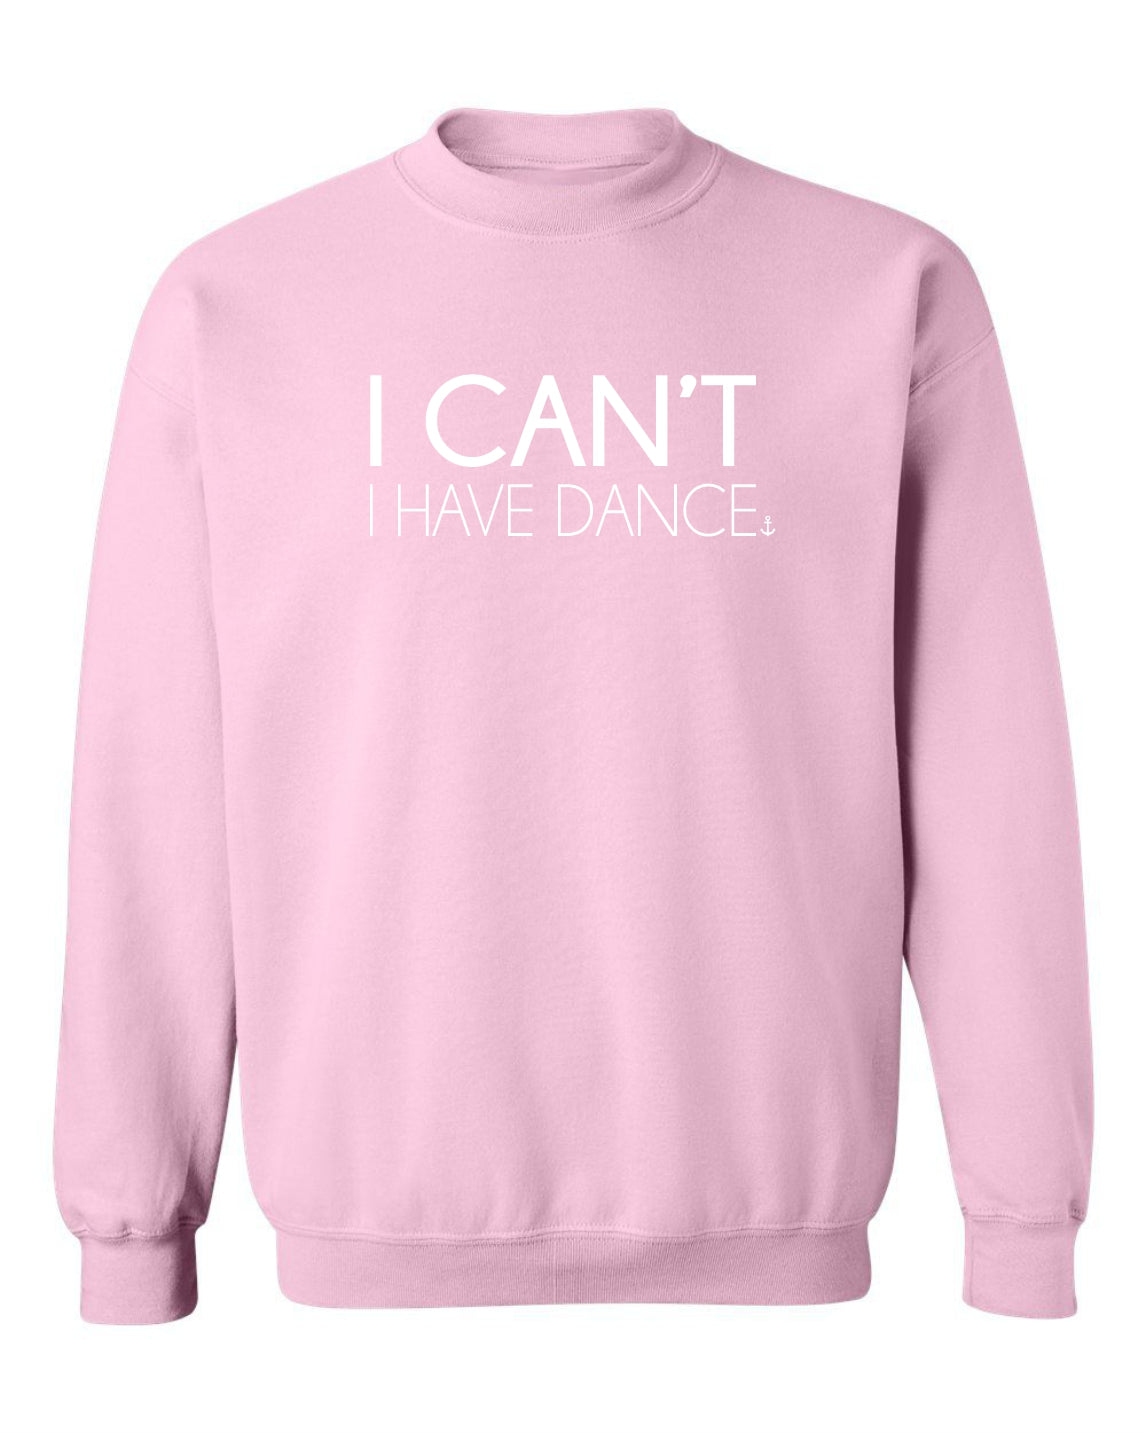 "I Can't. I Have Dance." Unisex Crewneck Sweatshirt